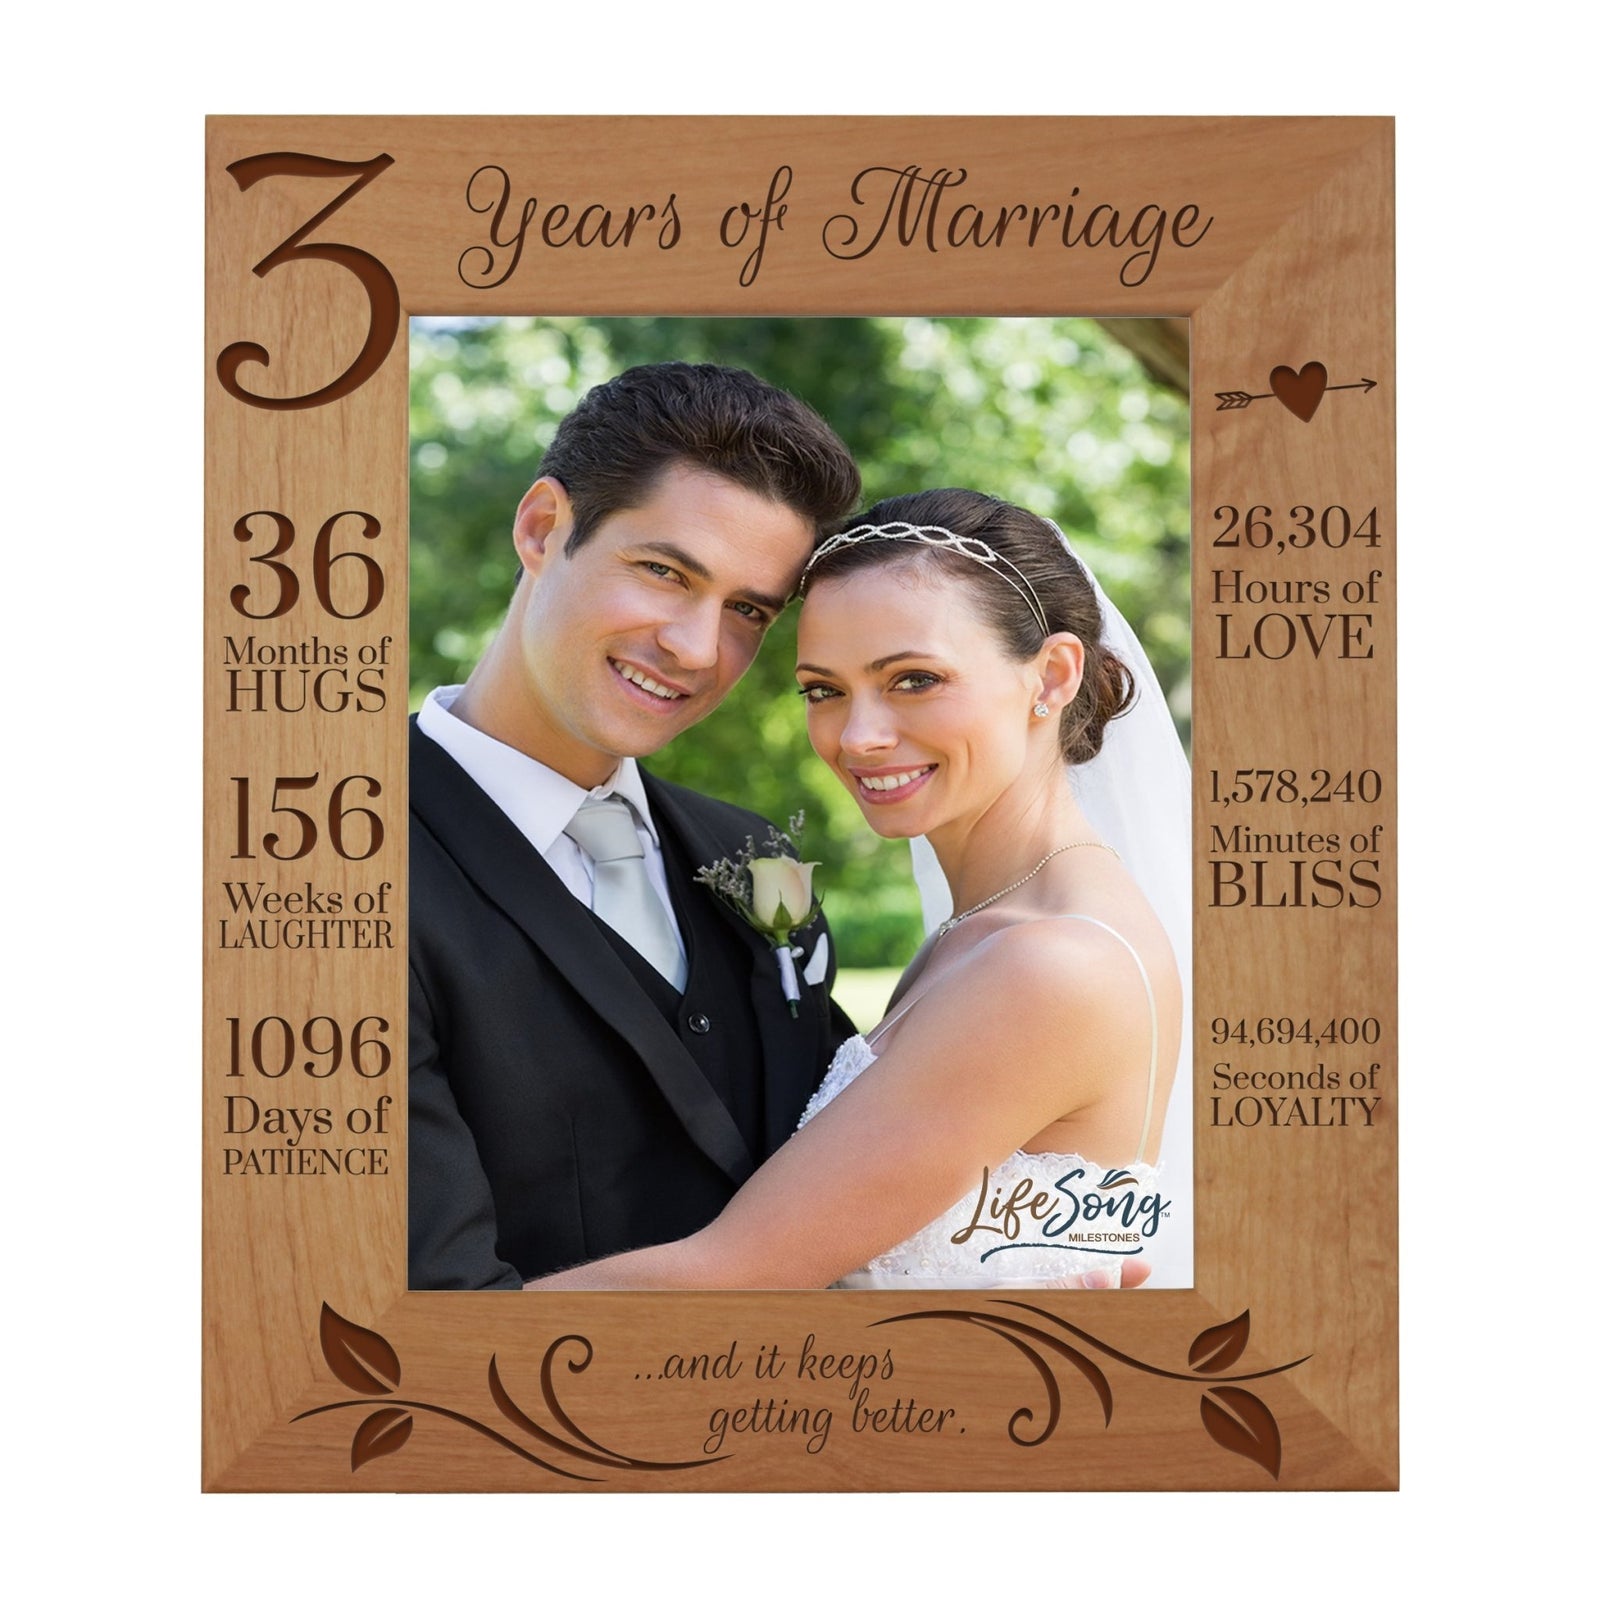 Lifesong Milestones Couples 3rd Wedding Anniversary Photo Frame Home Decor Gift Ideas